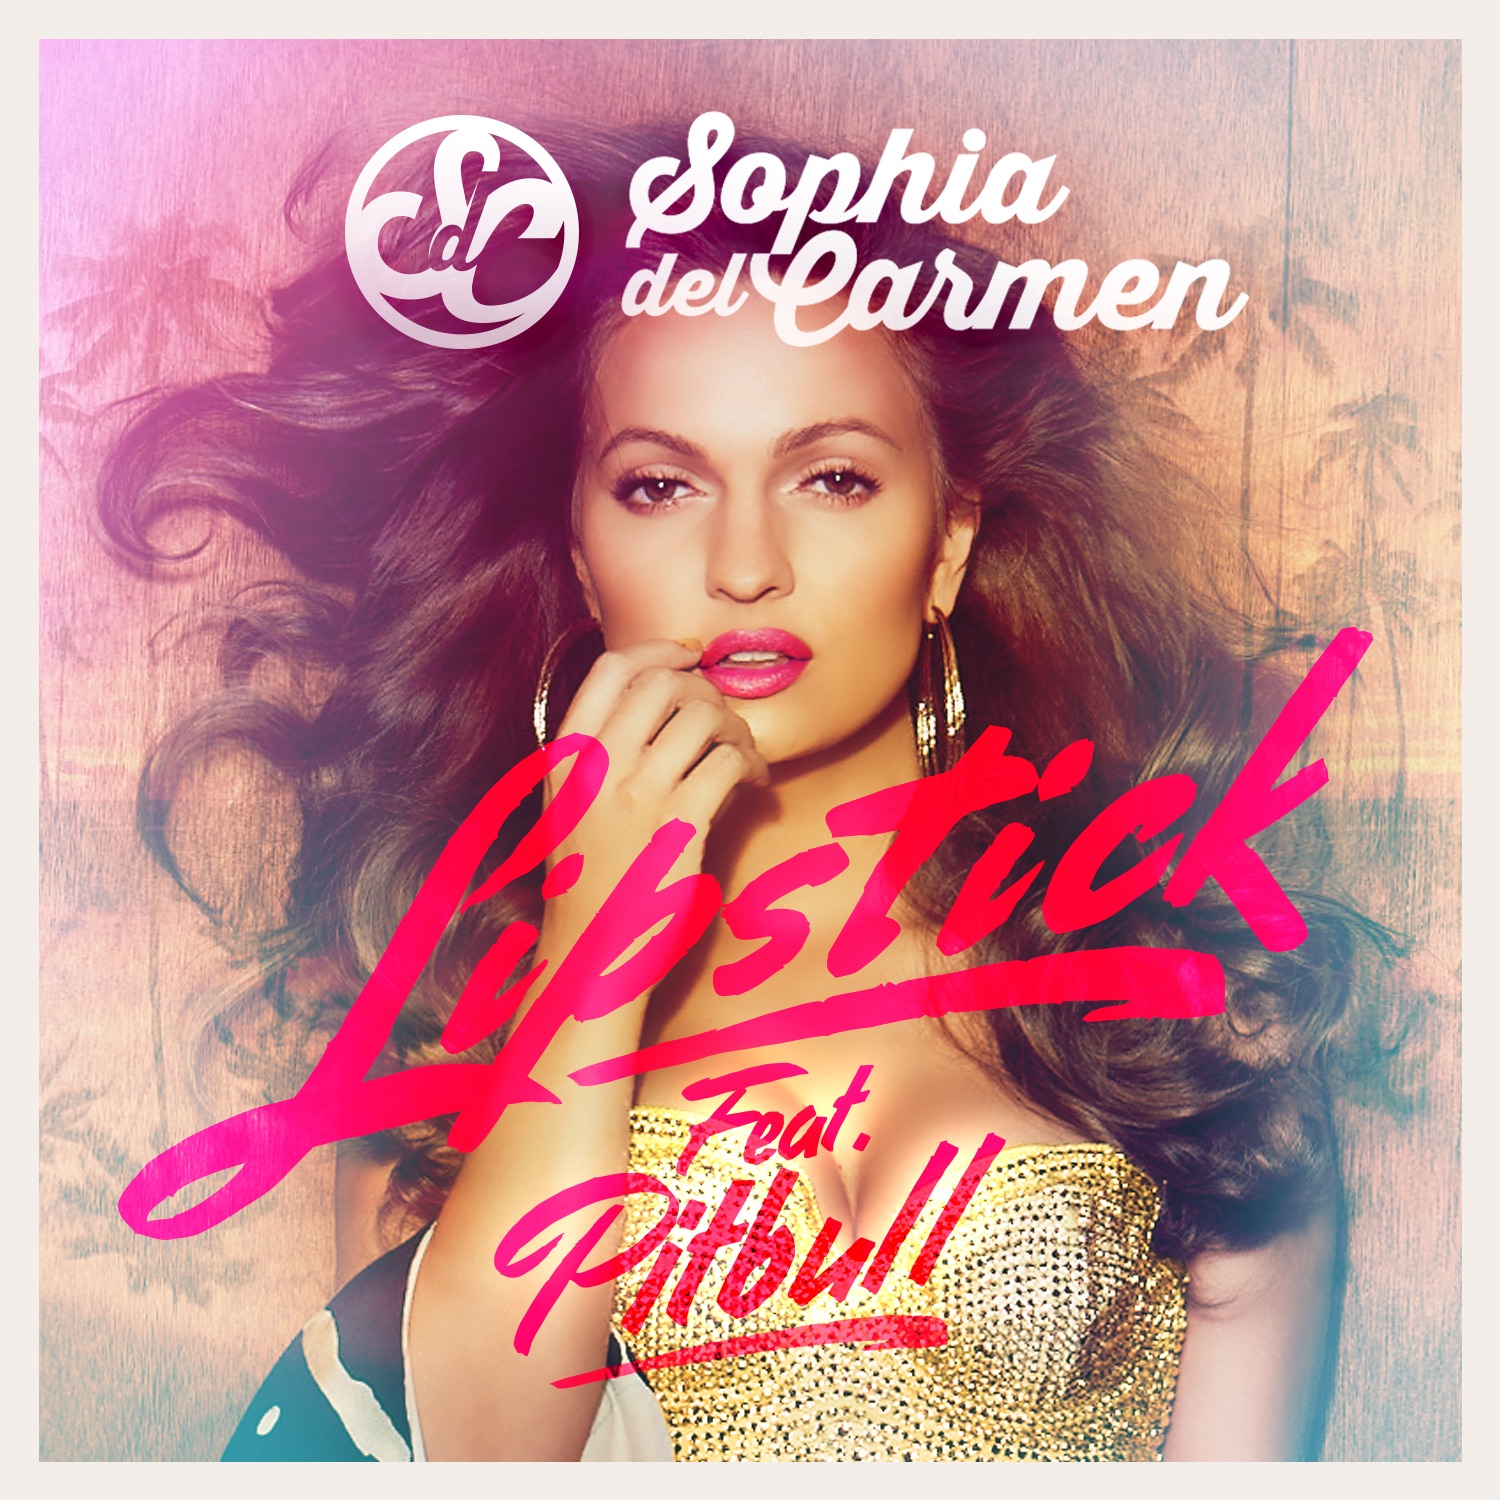 Sophia Del Carmen ft. featuring Pitbull Lipstick cover artwork